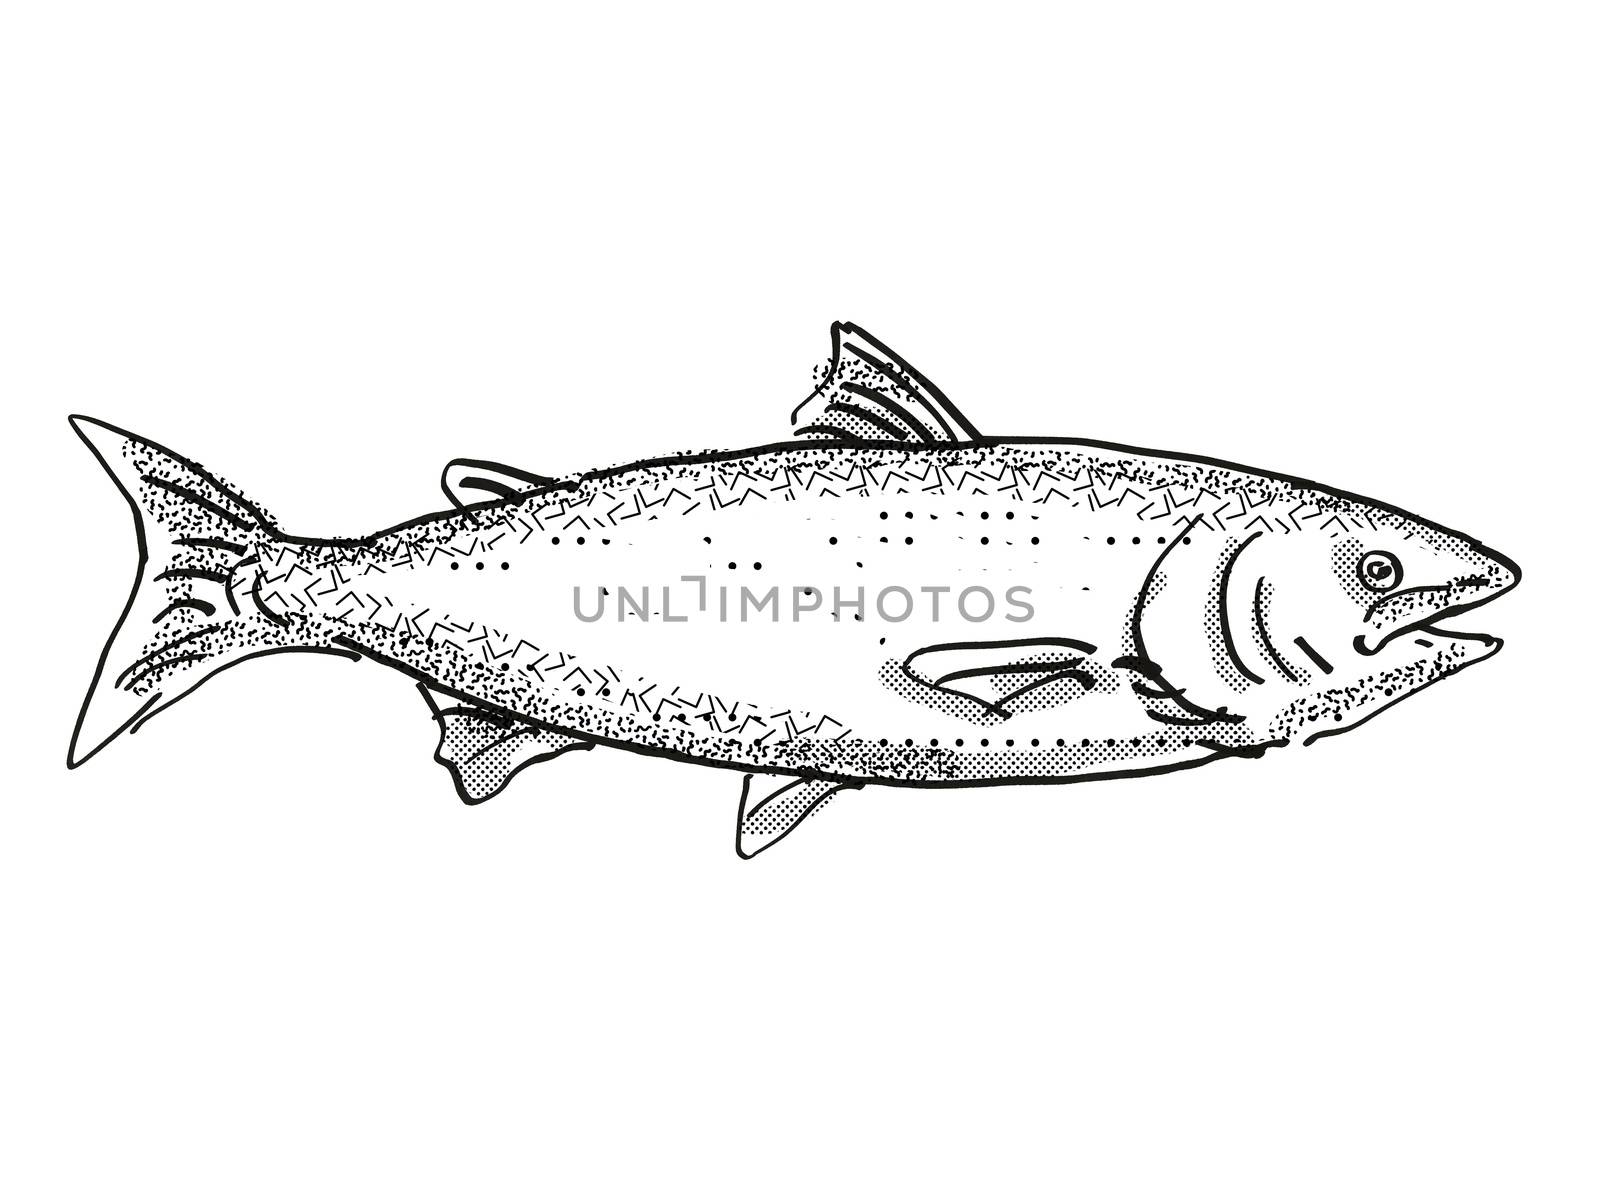 New Zealand King Salmon Fish Cartoon Retro Drawing by patrimonio